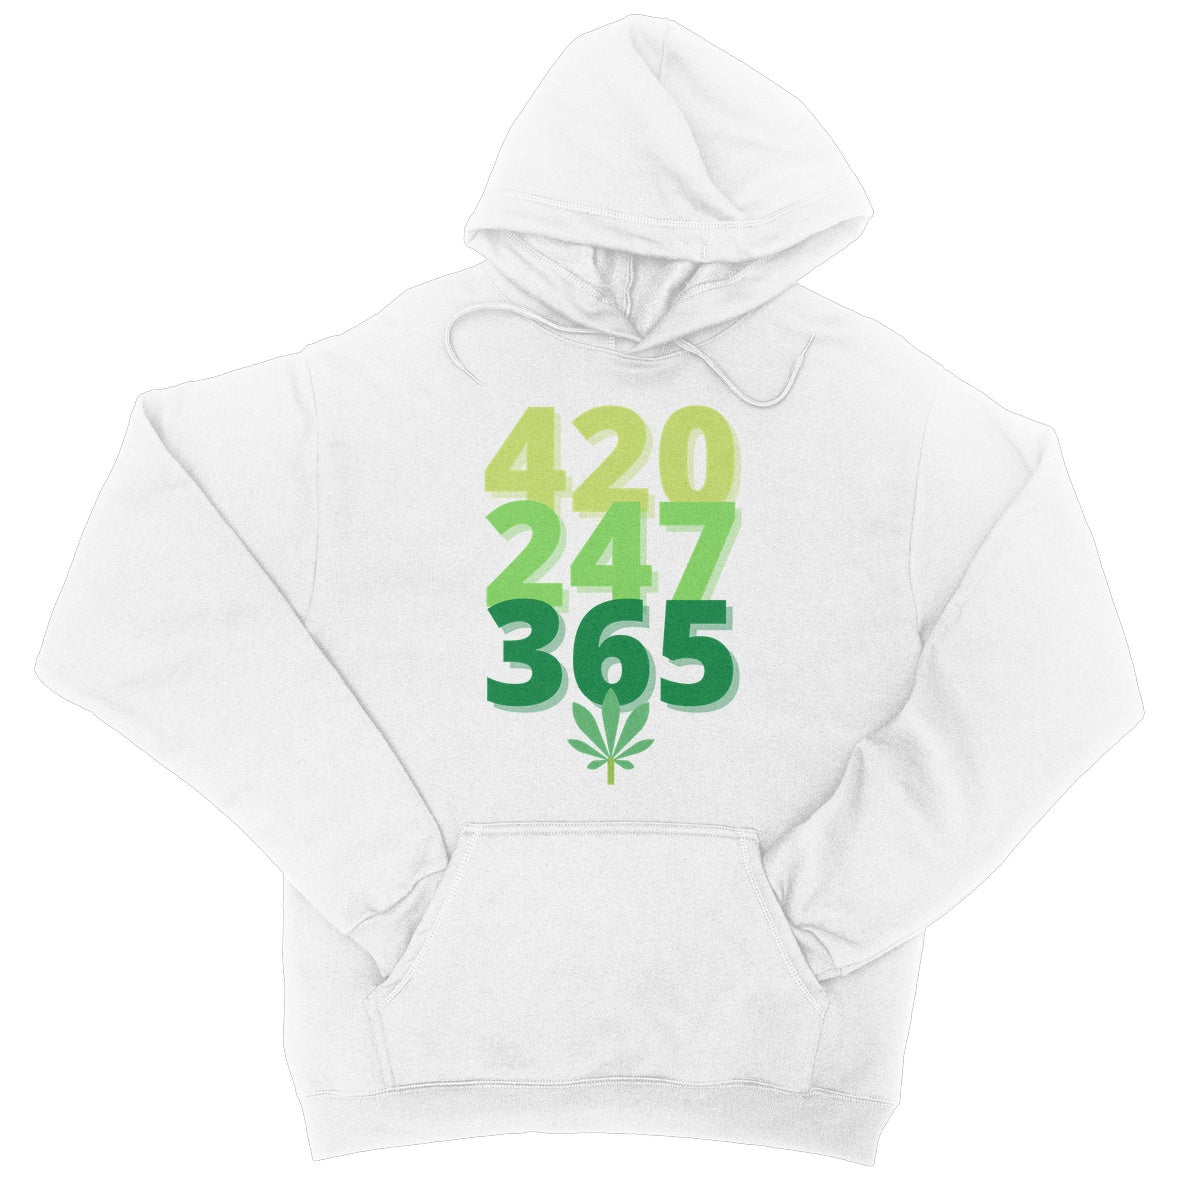 420 247 365 hoodie white